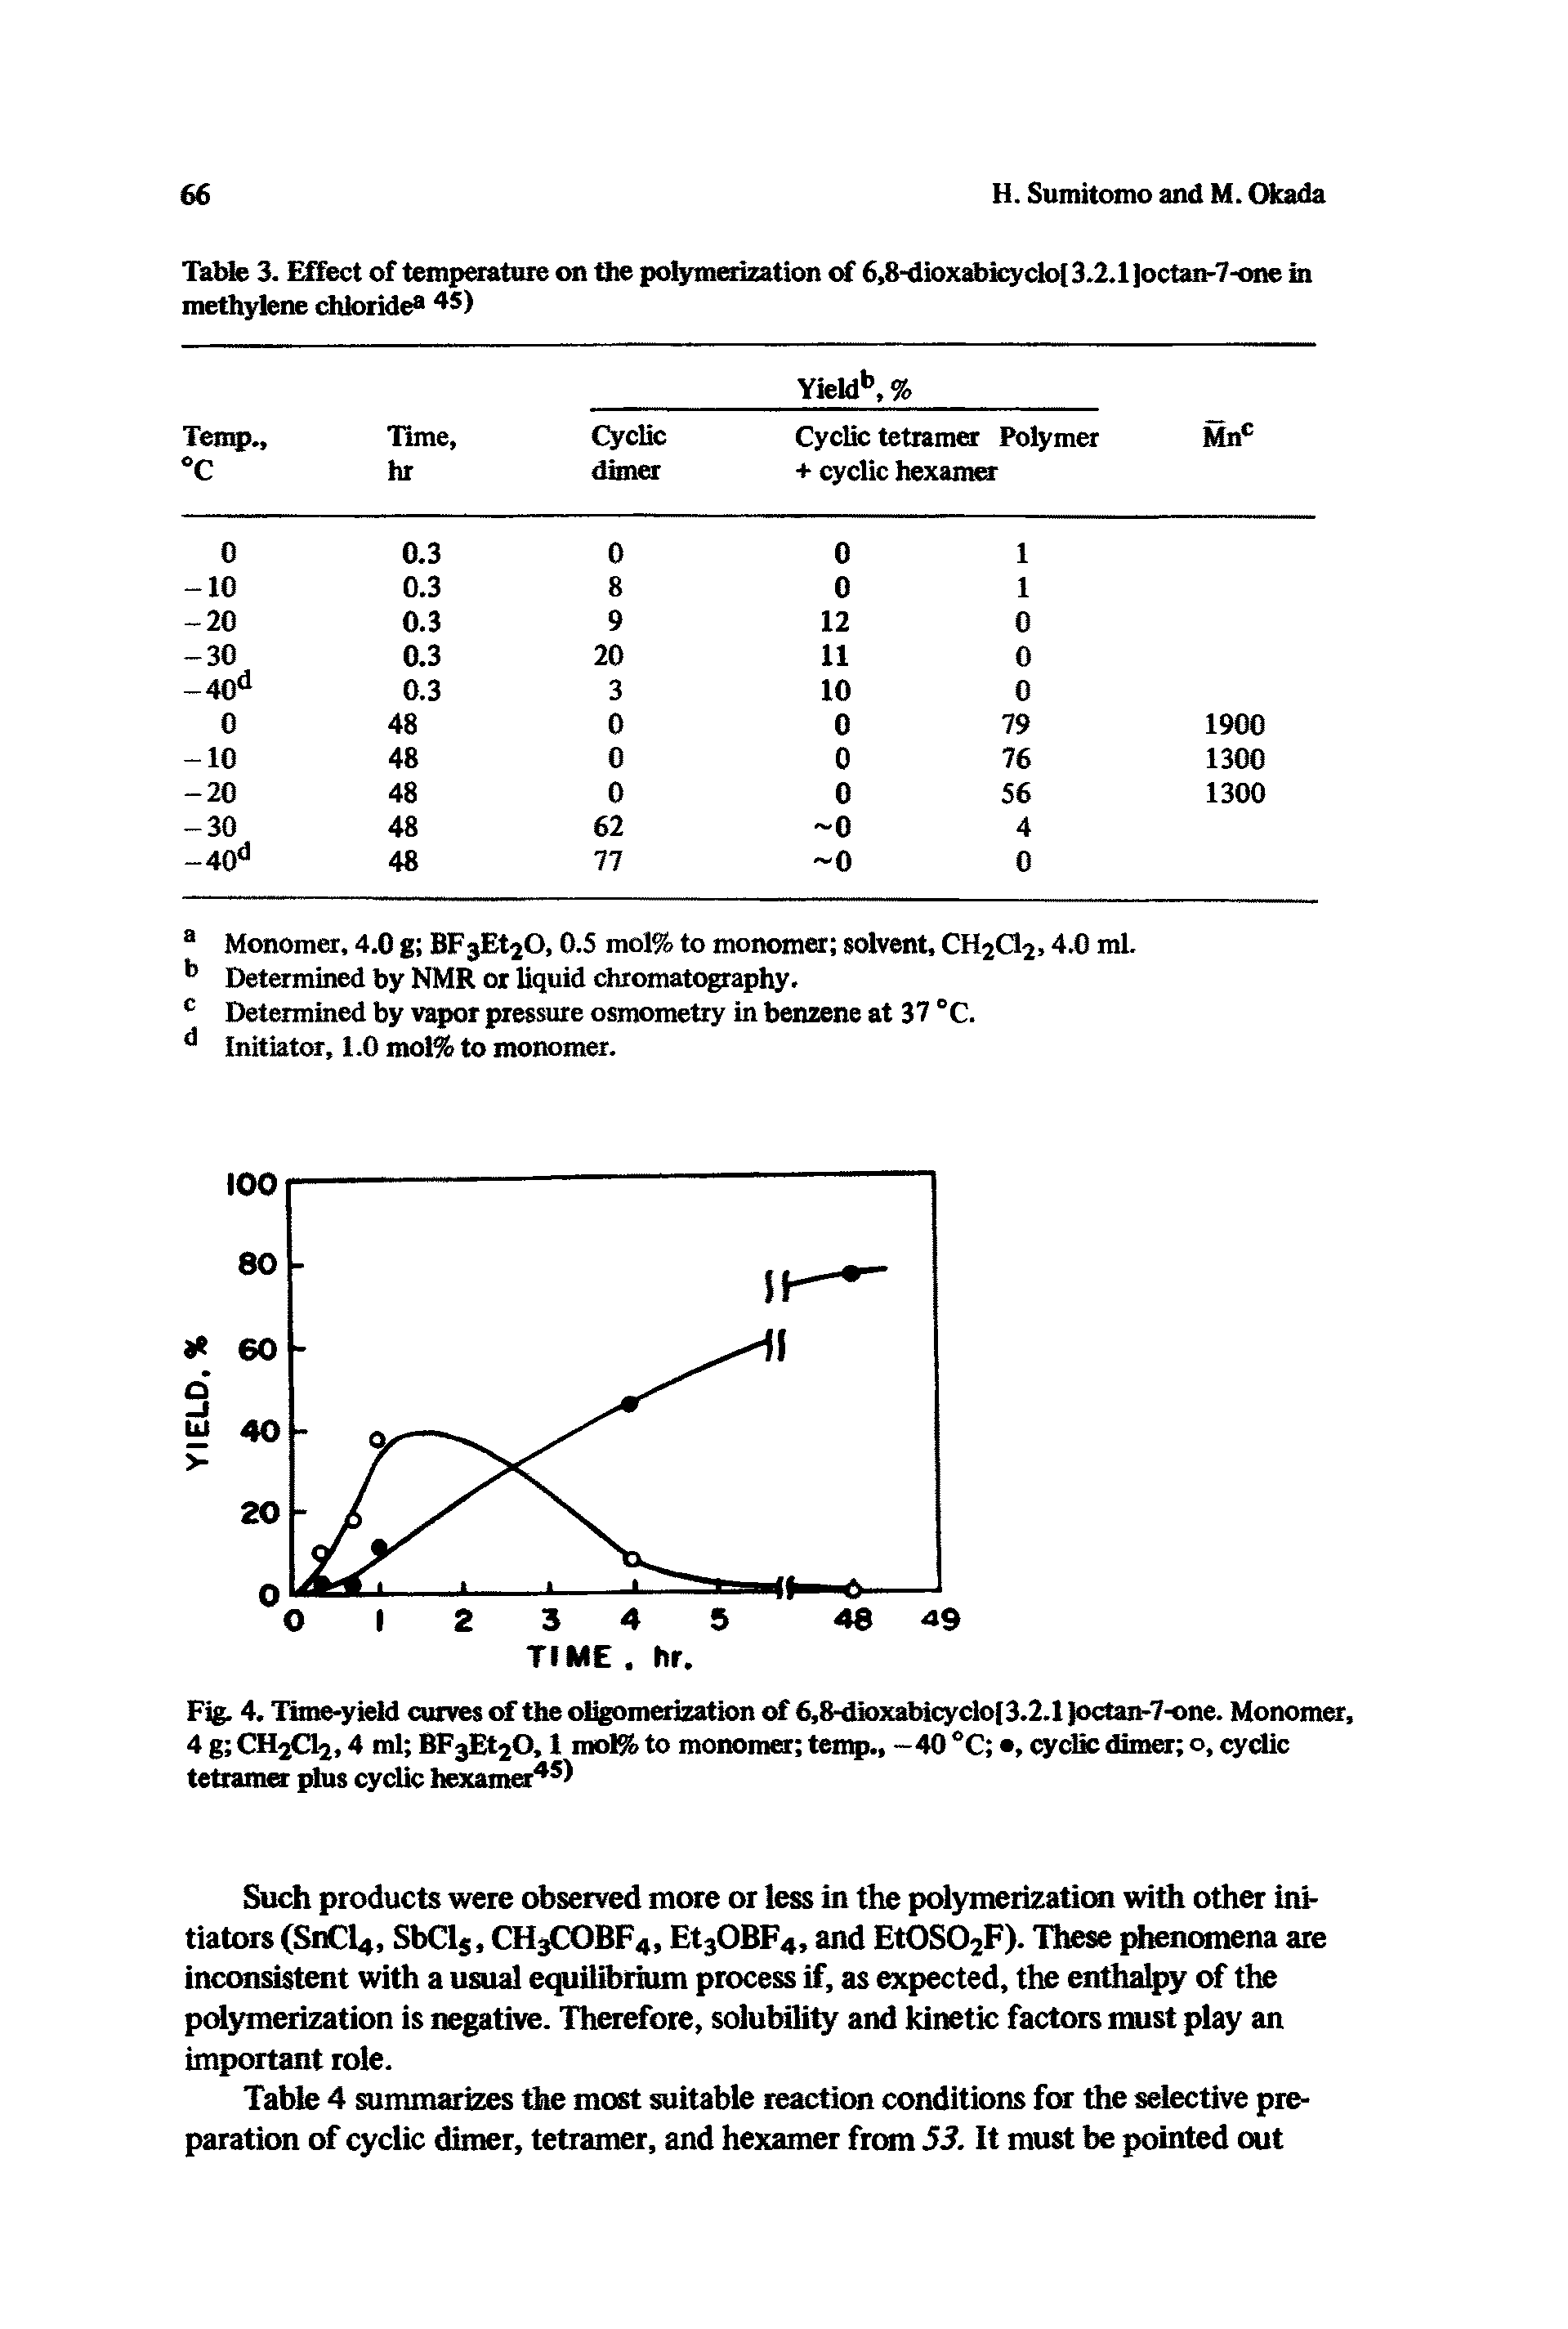 Fig. 4. Time-yield curves of the oligomerization of 6,8-dh>xabicyclo[3.2.1 Joctan-7-one. Monomer, 4 g CH2Cl2 4 ml BF3Et20, l mol% to monomer temp., -40 °C , cyclic dimer o, cyclic tetramer plus cyclic hexamer45)...